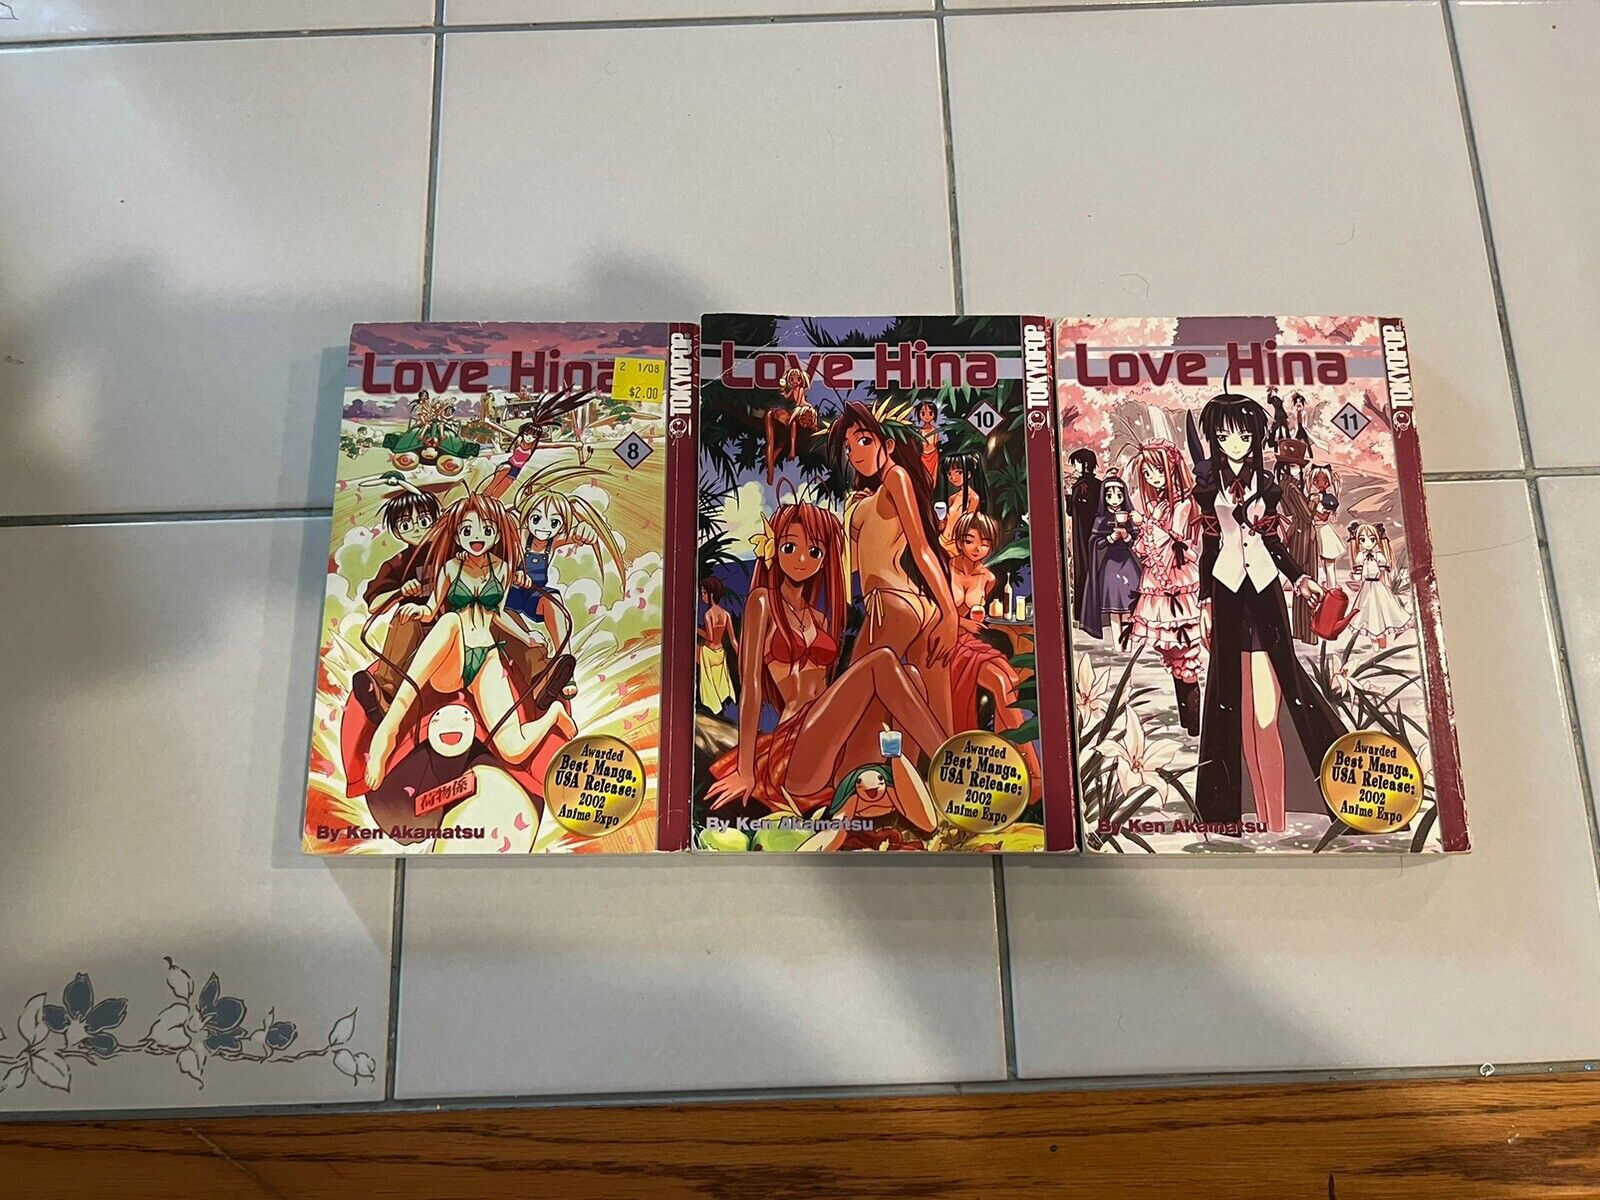 Love Hina by Ken Akamatsu Vol 8,10,11 Manga Lot English Tokyopop